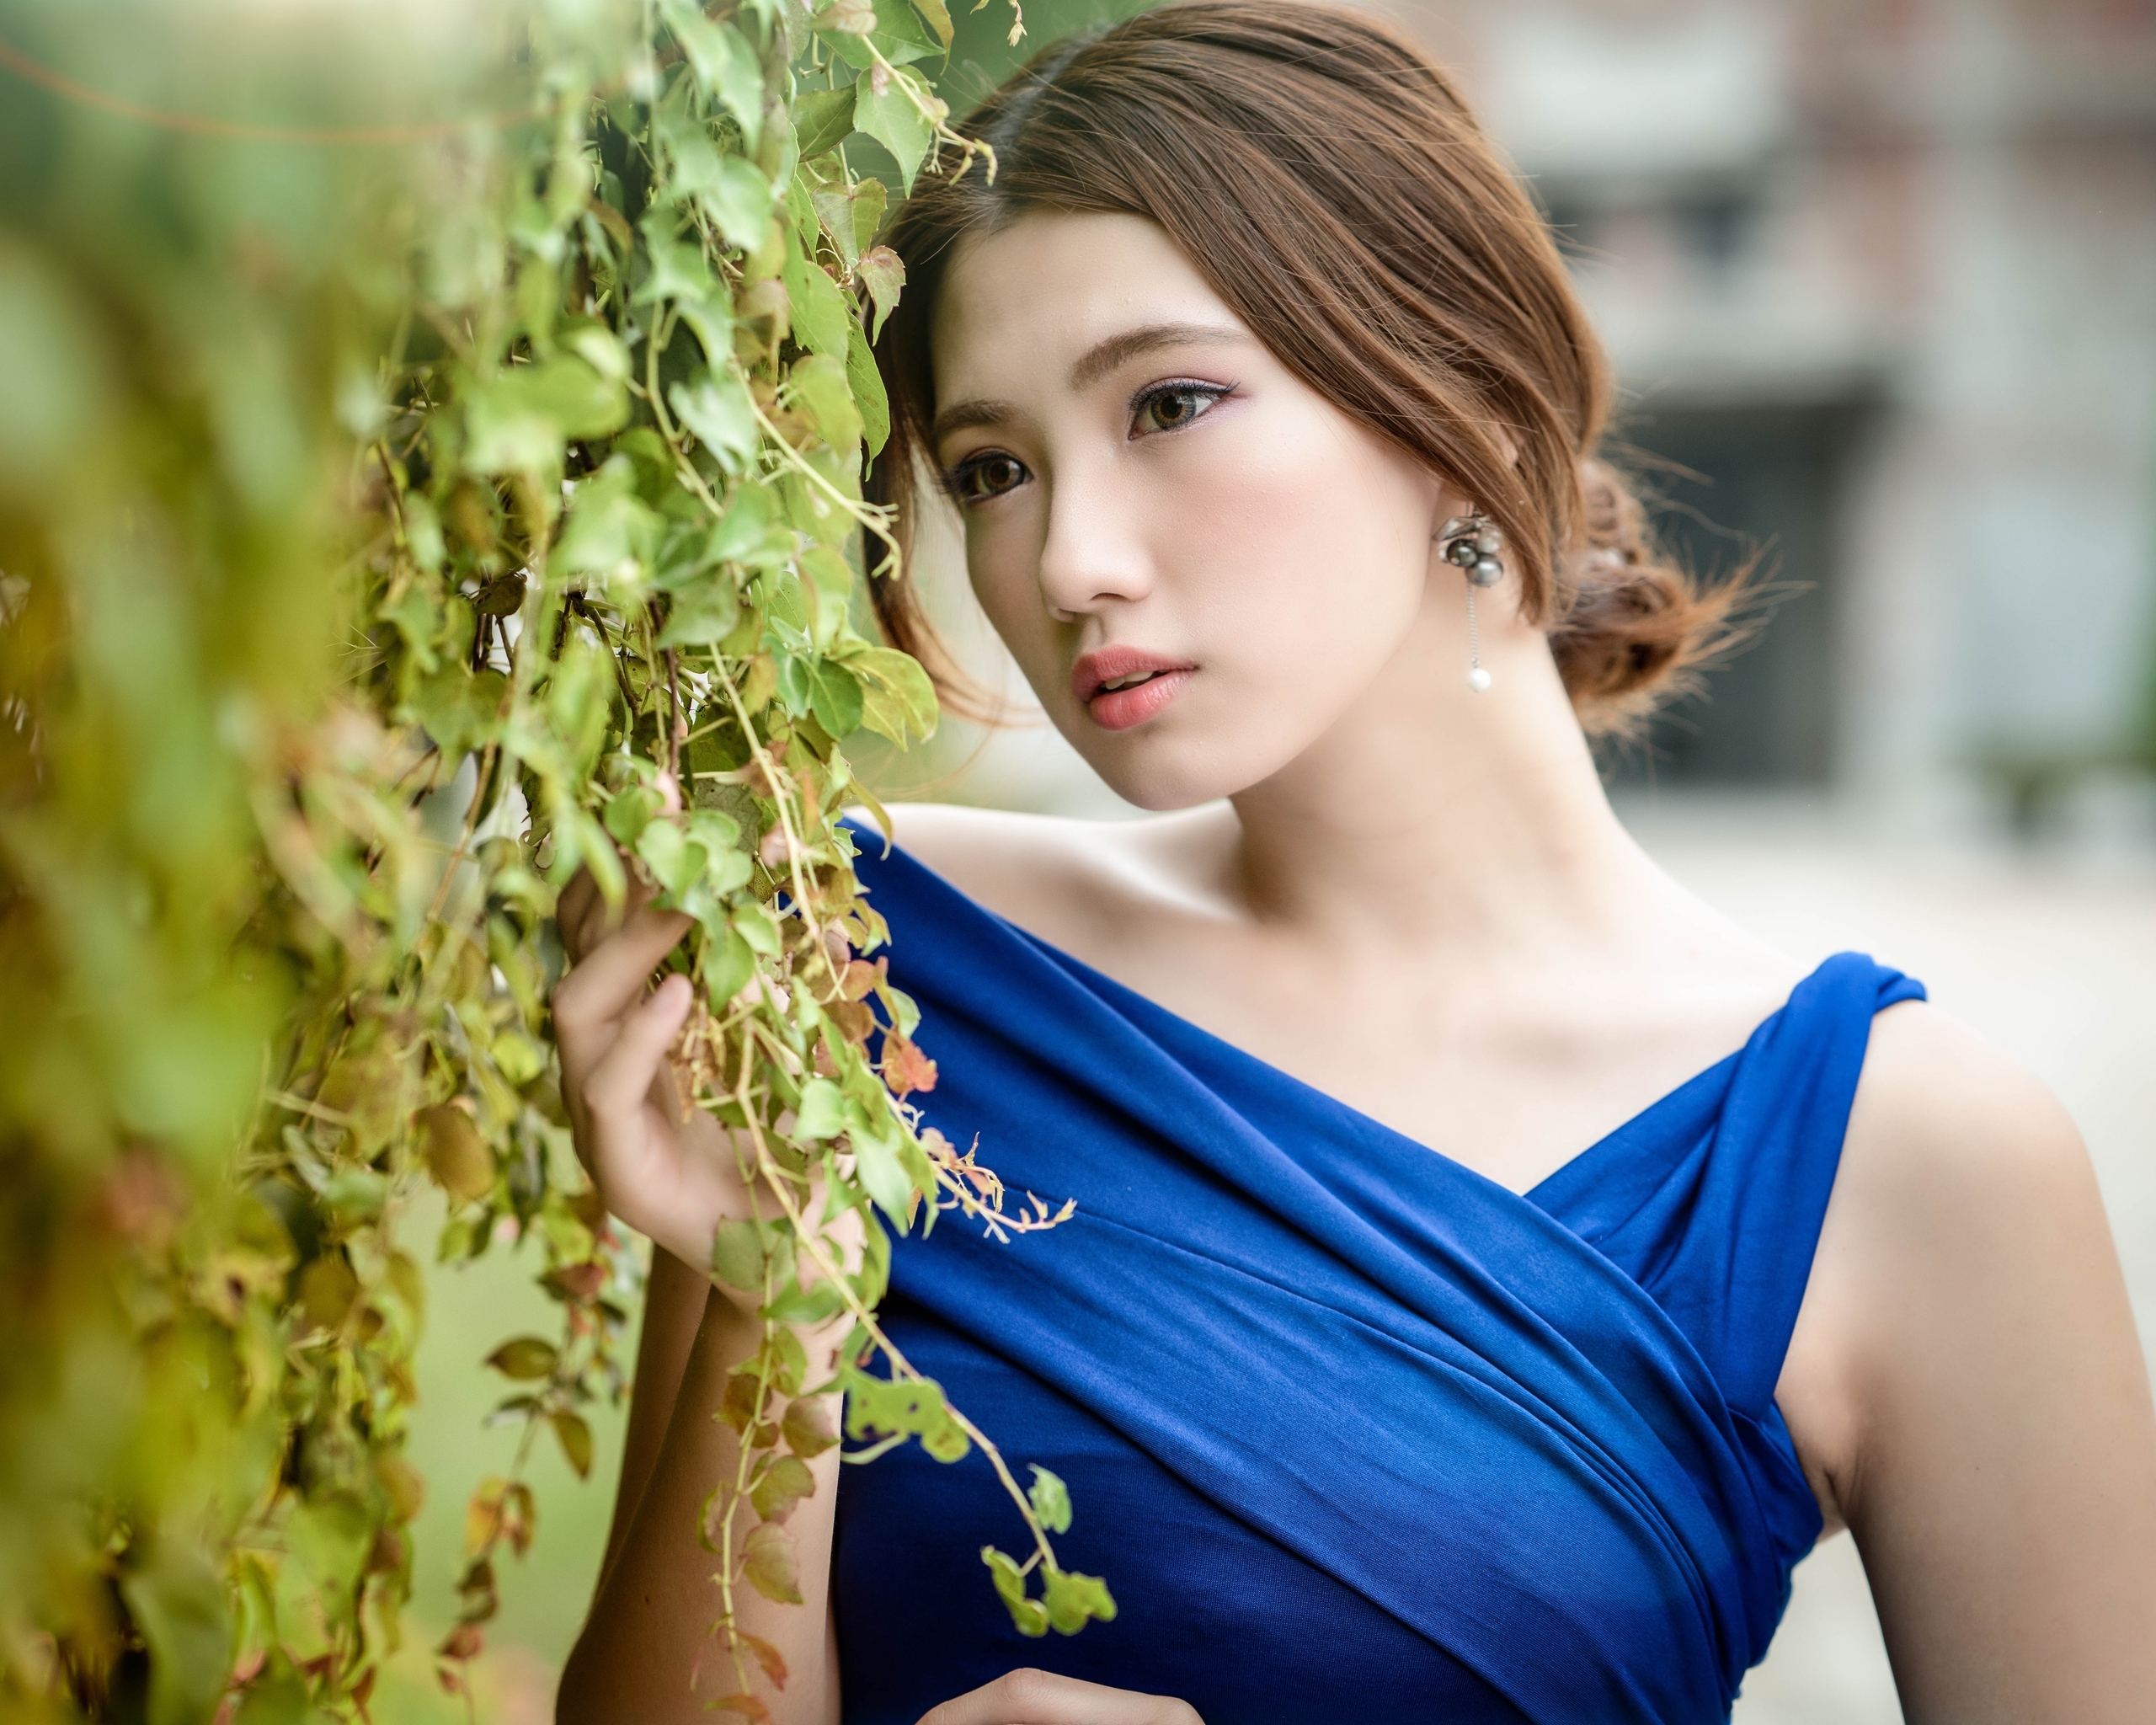 Image: Girl, Asian, dress, grass, view, posing